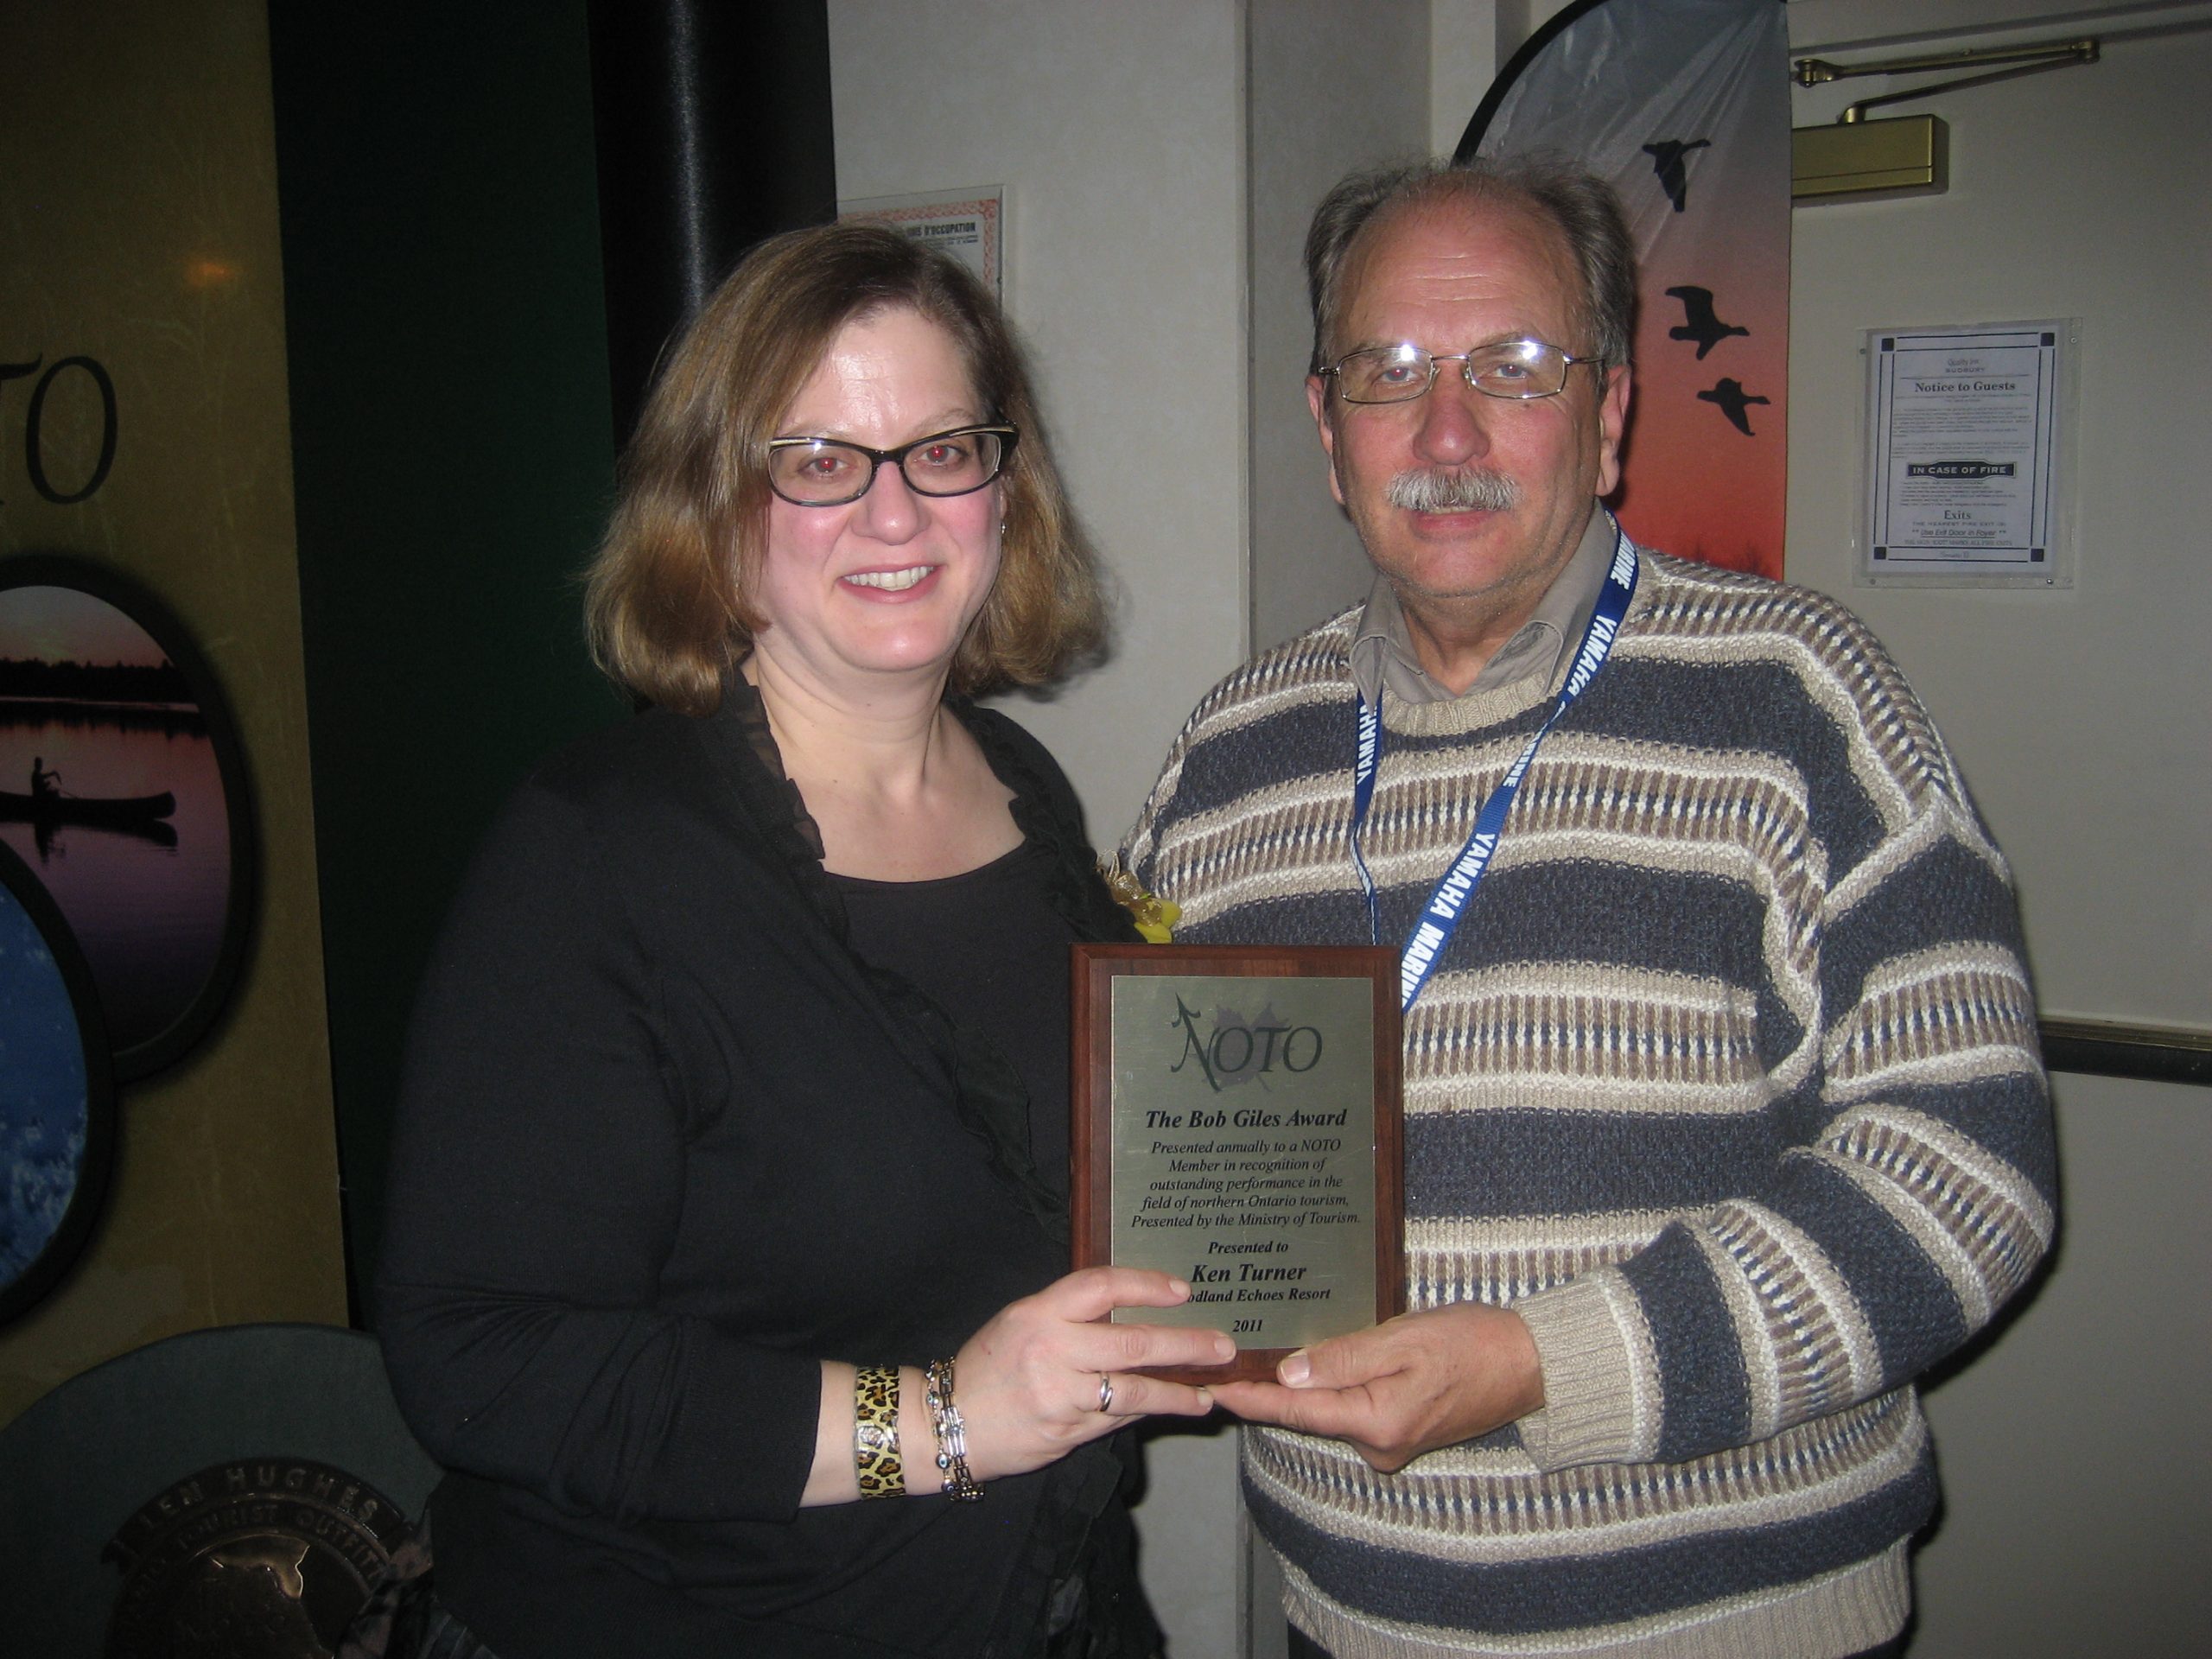 Diane Wise Presents the Bob Giles award to Ken Turner